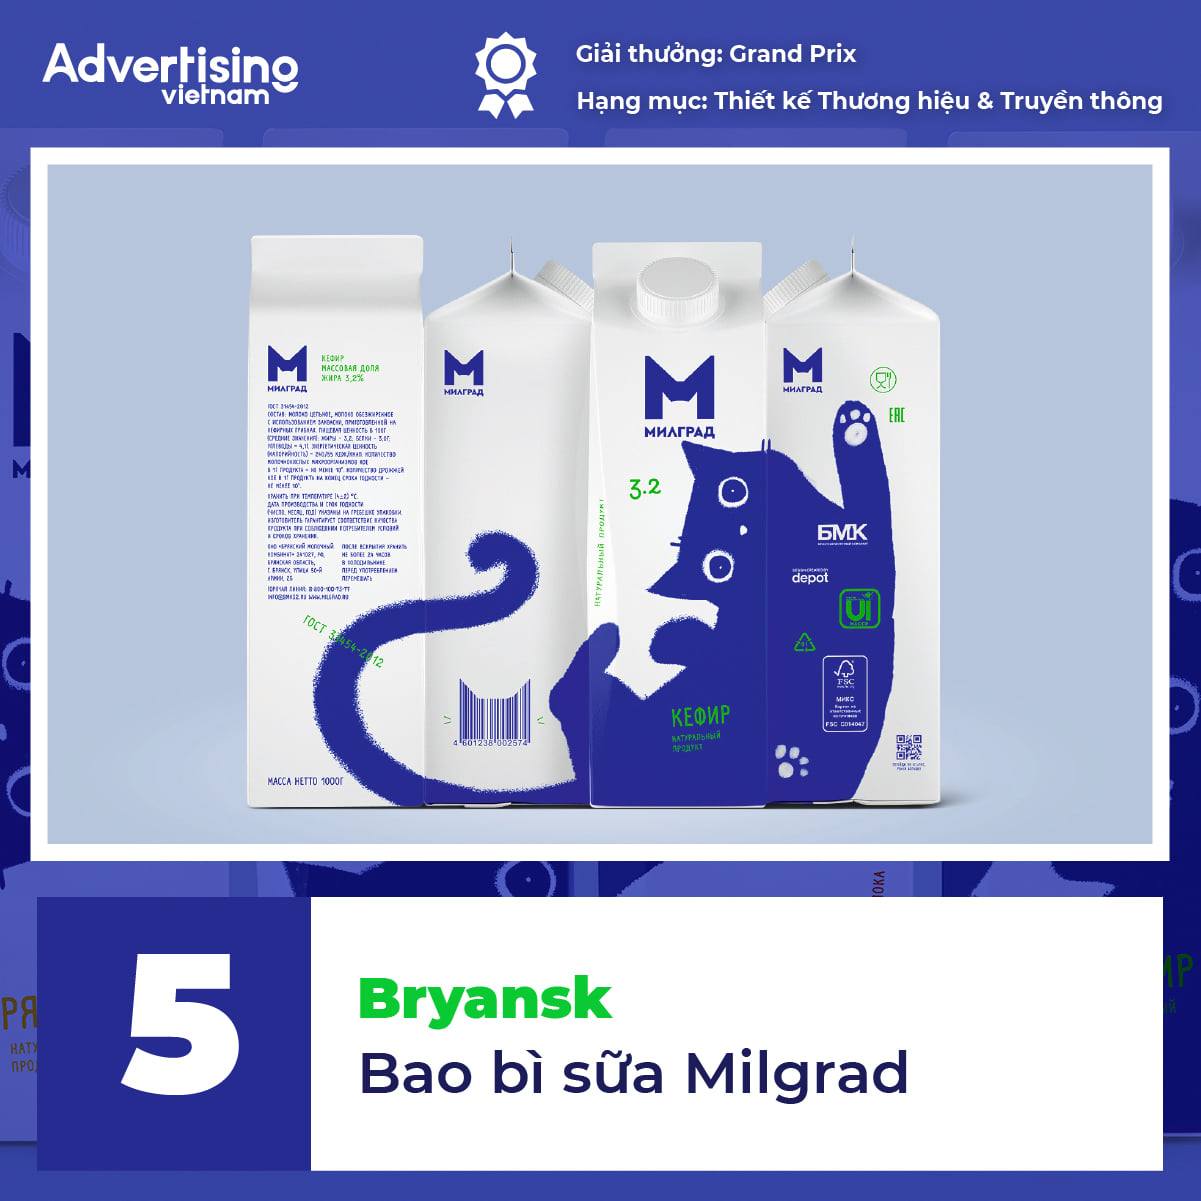 Bryansk Bao bì sữa Milgrad